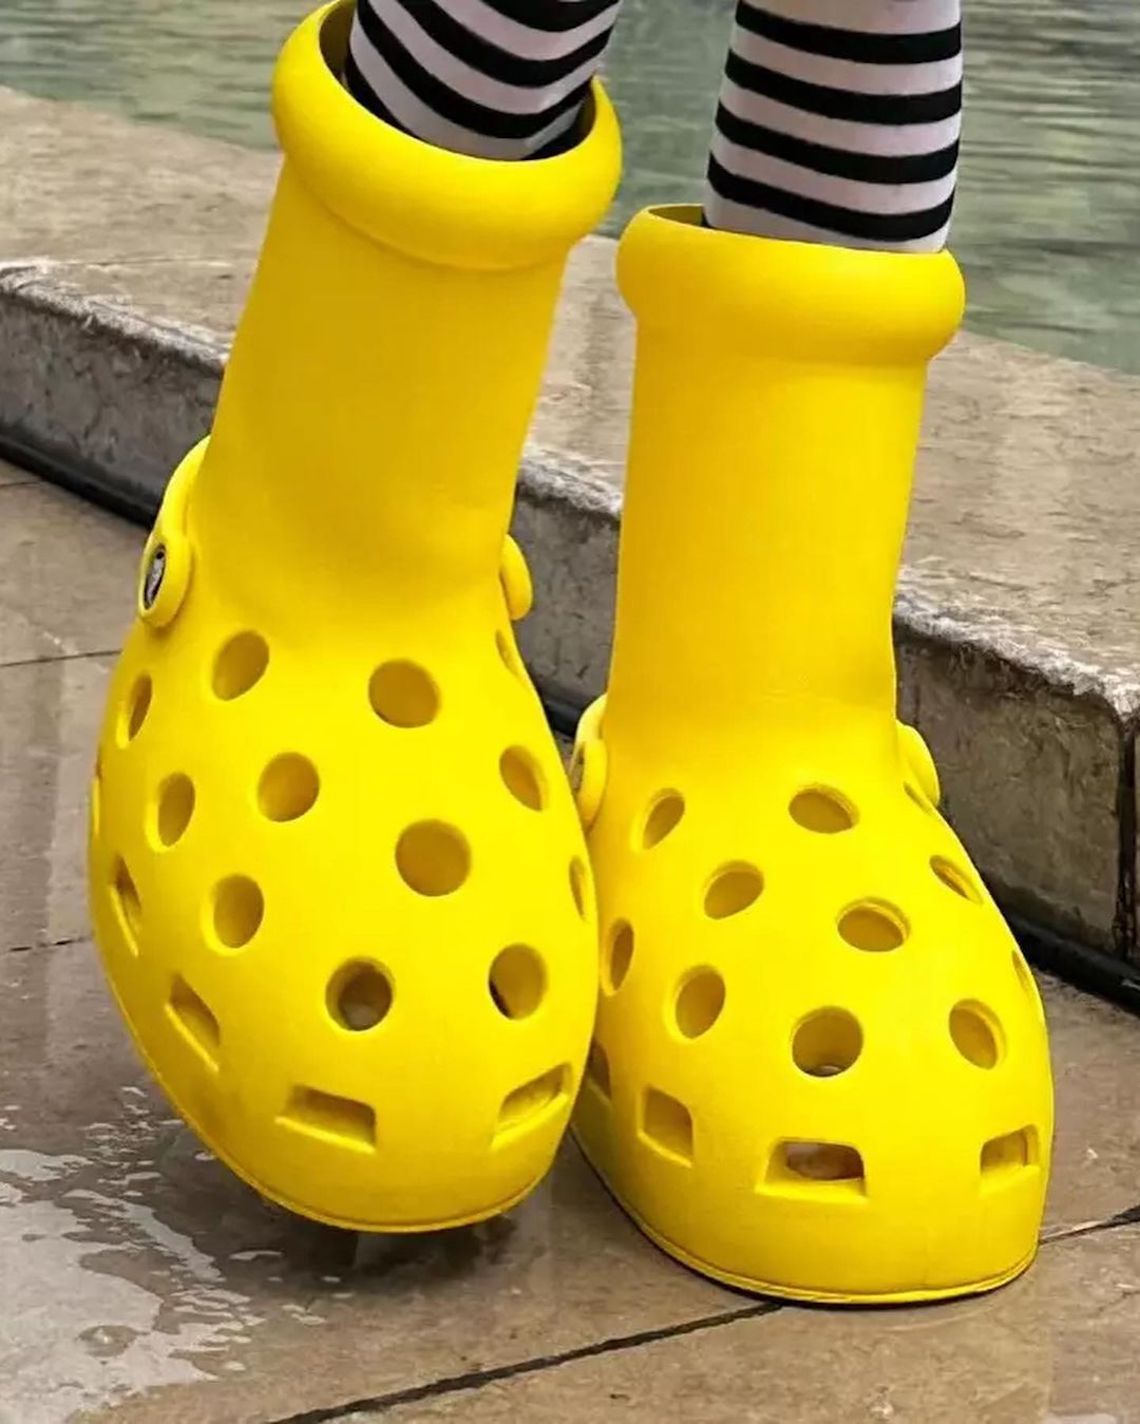 MSCHF x Crocs Yellow Clog Boots Release Date | SneakerNews.com